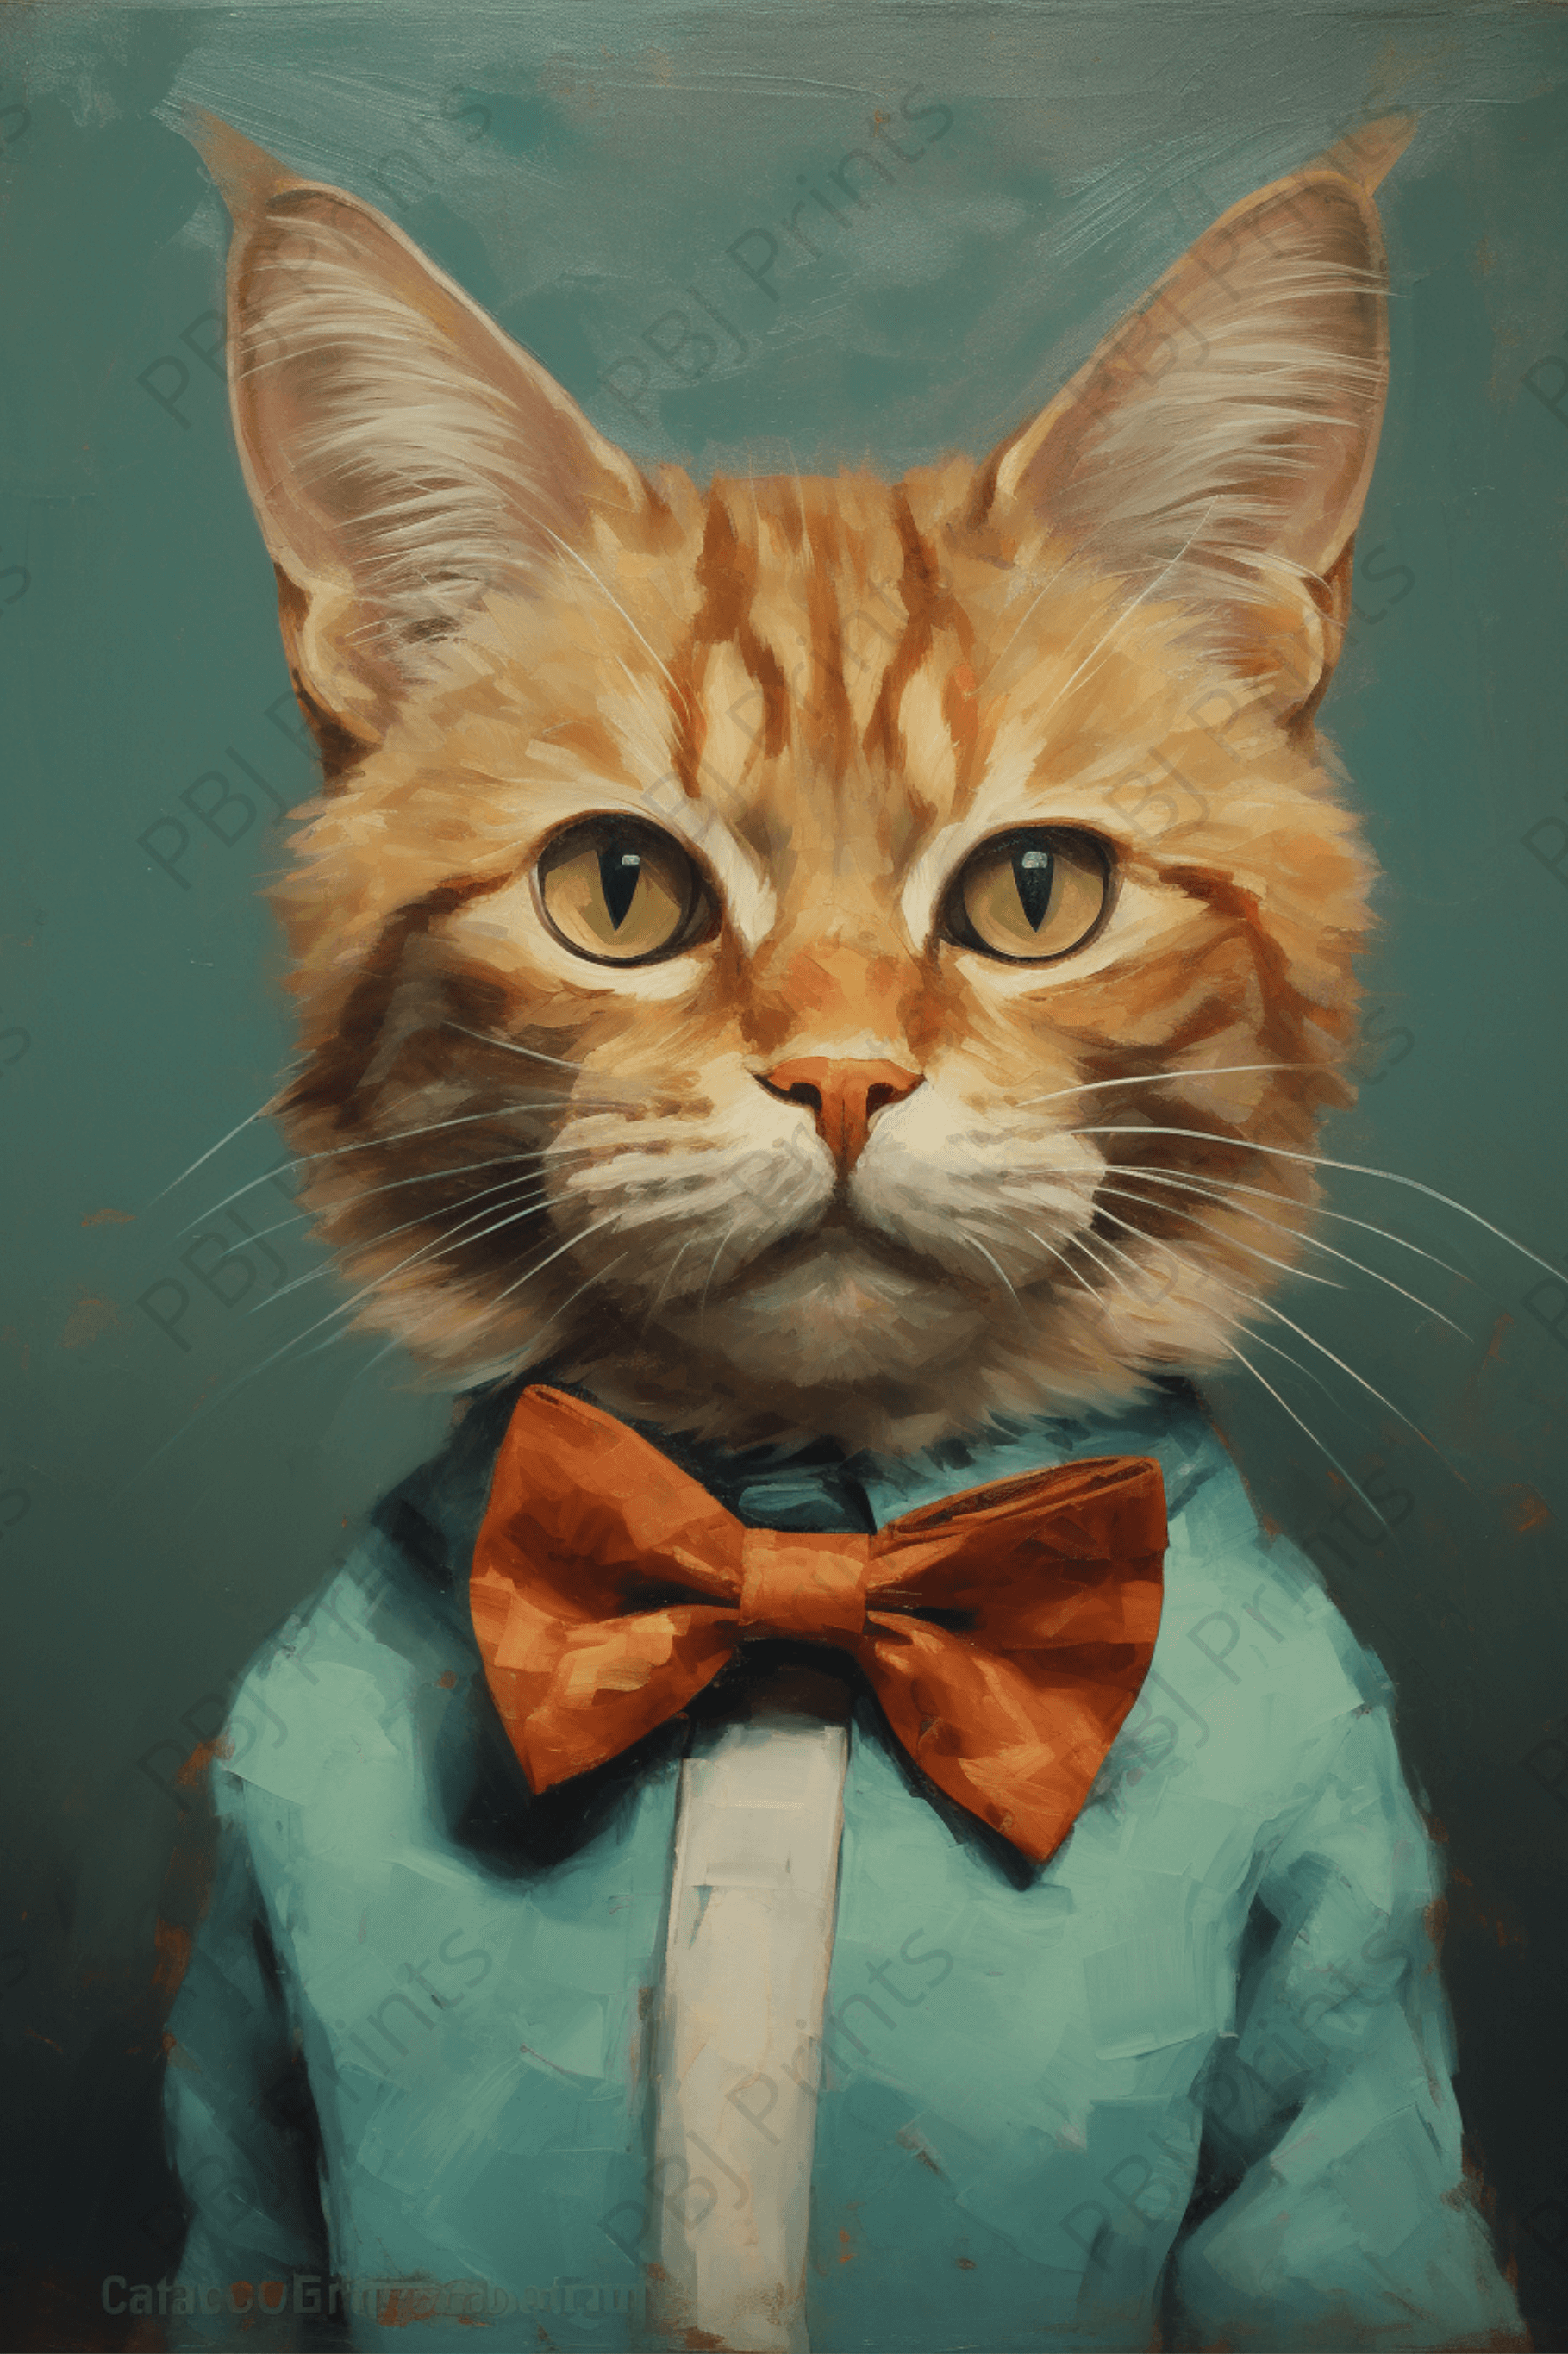 Oscar the Cat - Artist by Audrey Hughes - Art Prints, Decoupage Rice Paper, Flat Canvas Prints, Giclee Prints, Photo Prints, Poster Prints